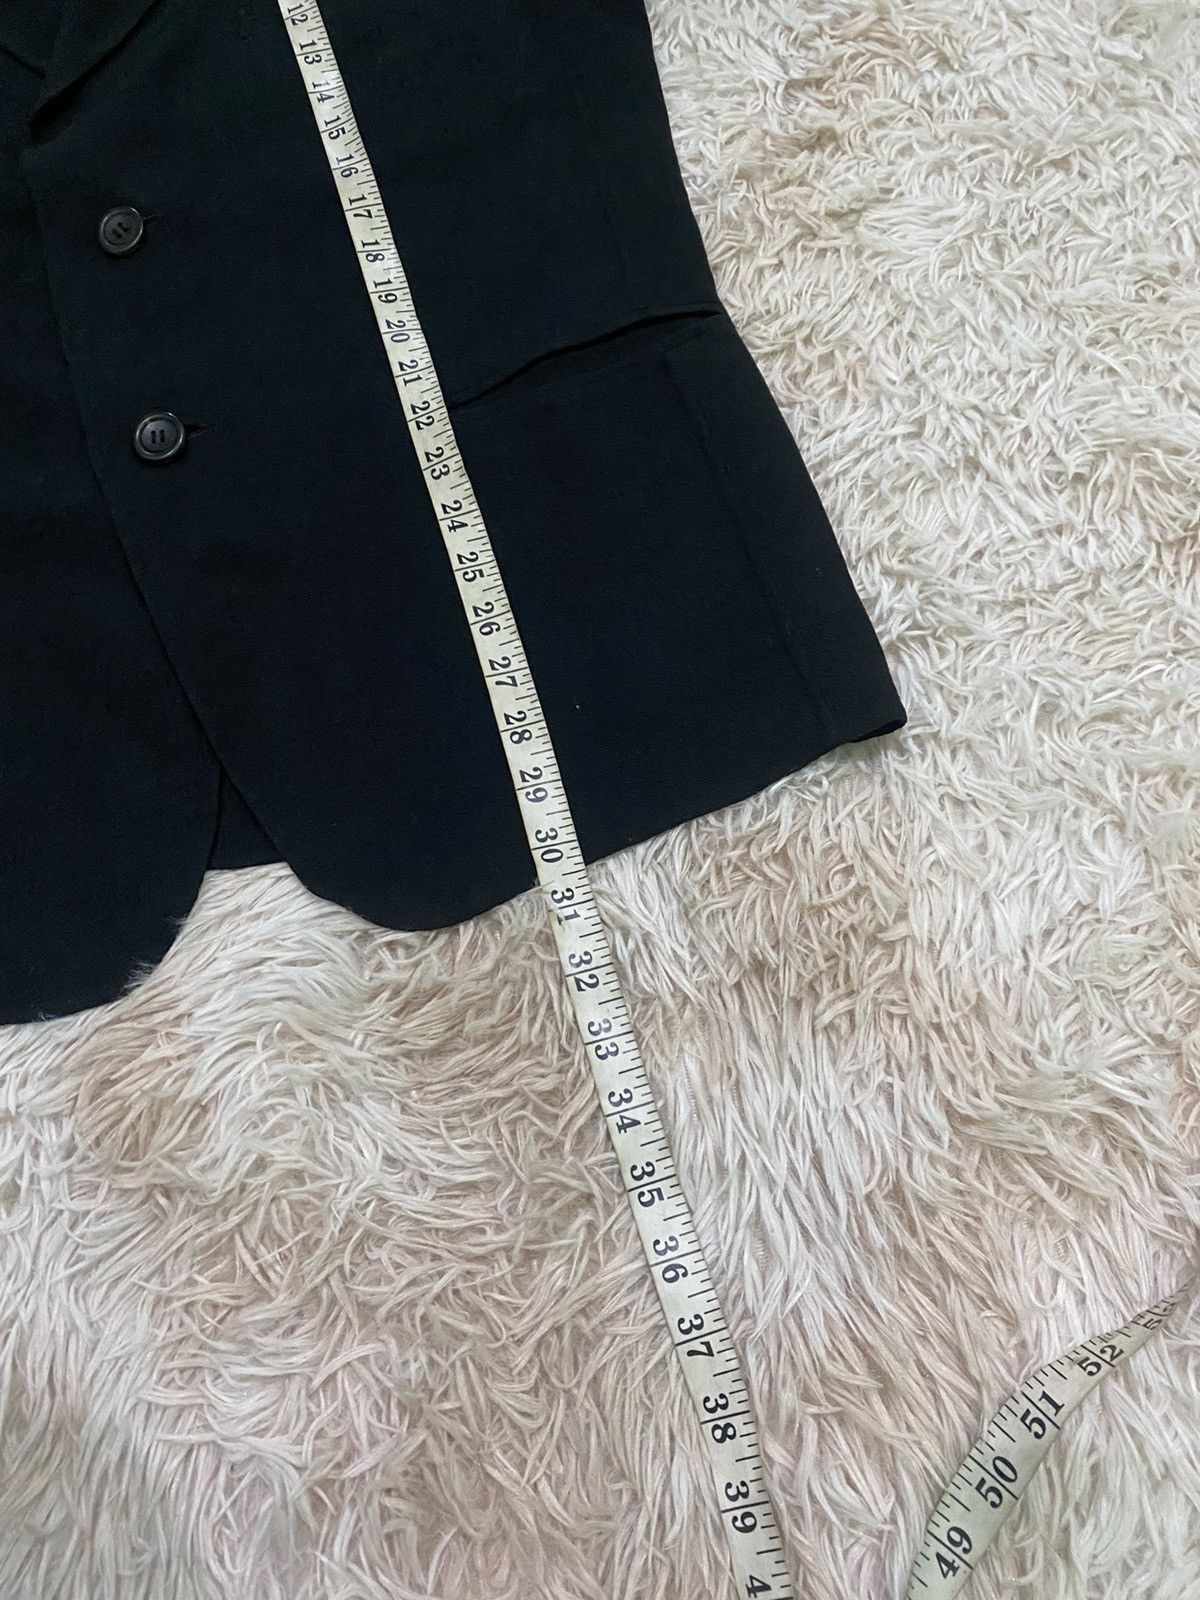 Vintage Issey Miyake Wool/Linen Jacket Blazer - 9